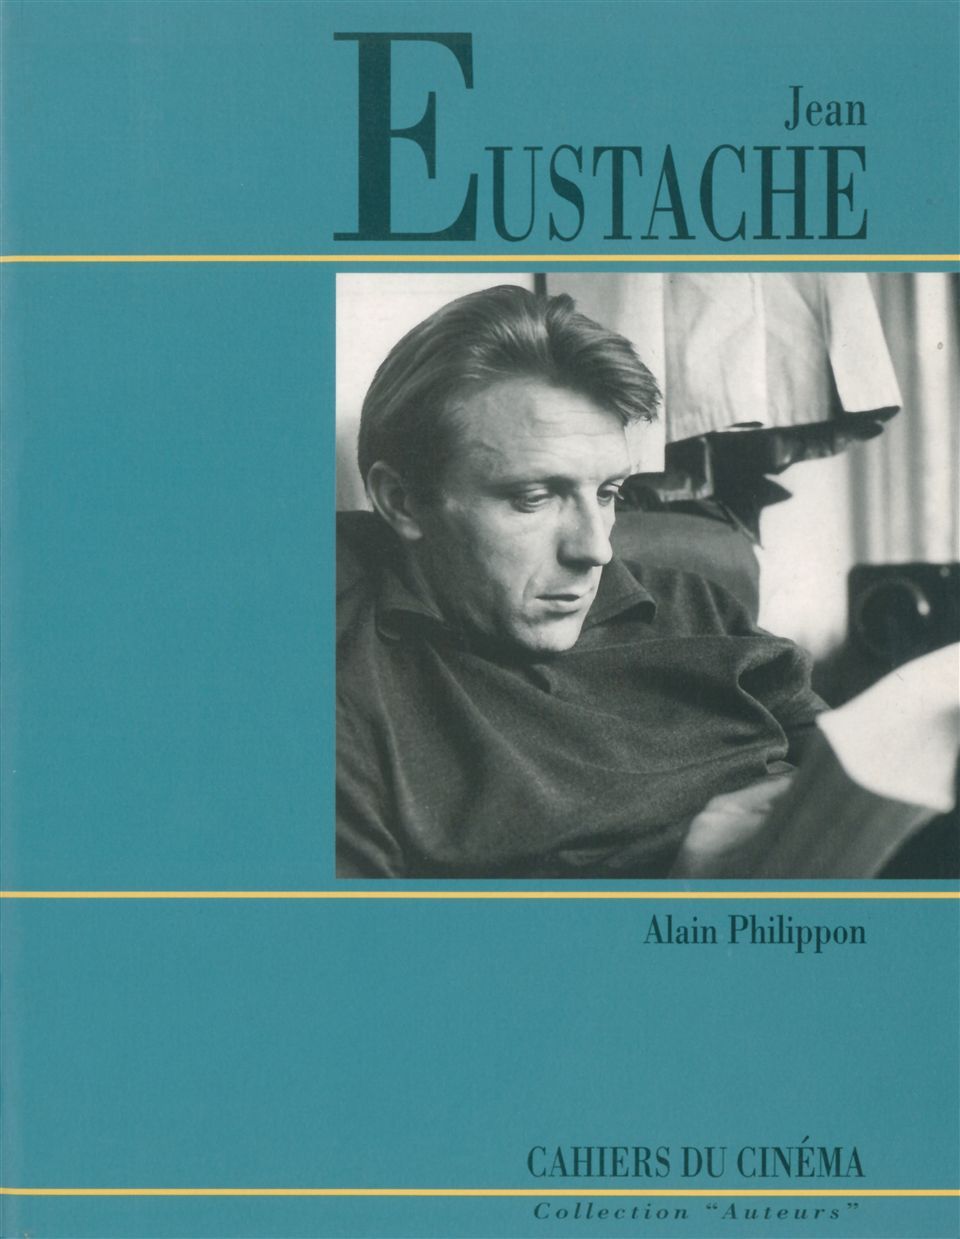 Book Jean Eustache Alain Philippon